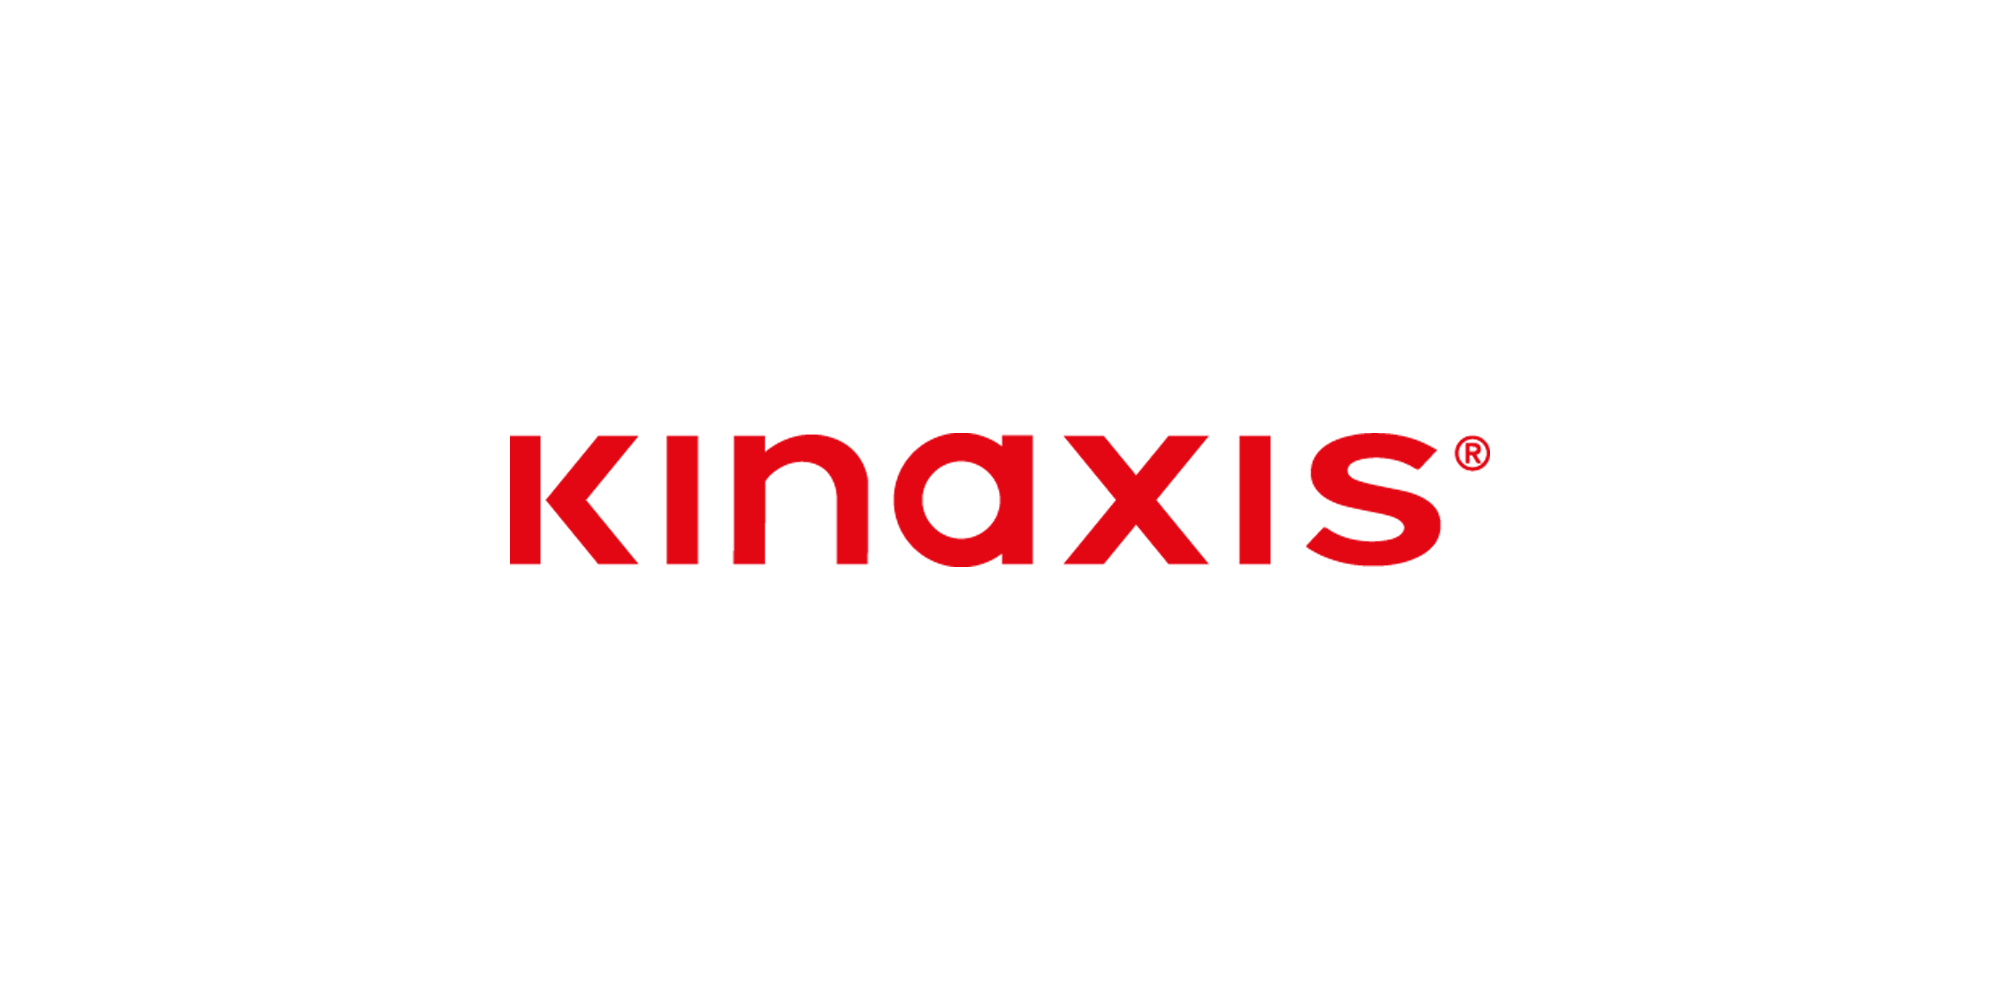 www.kinaxis.com